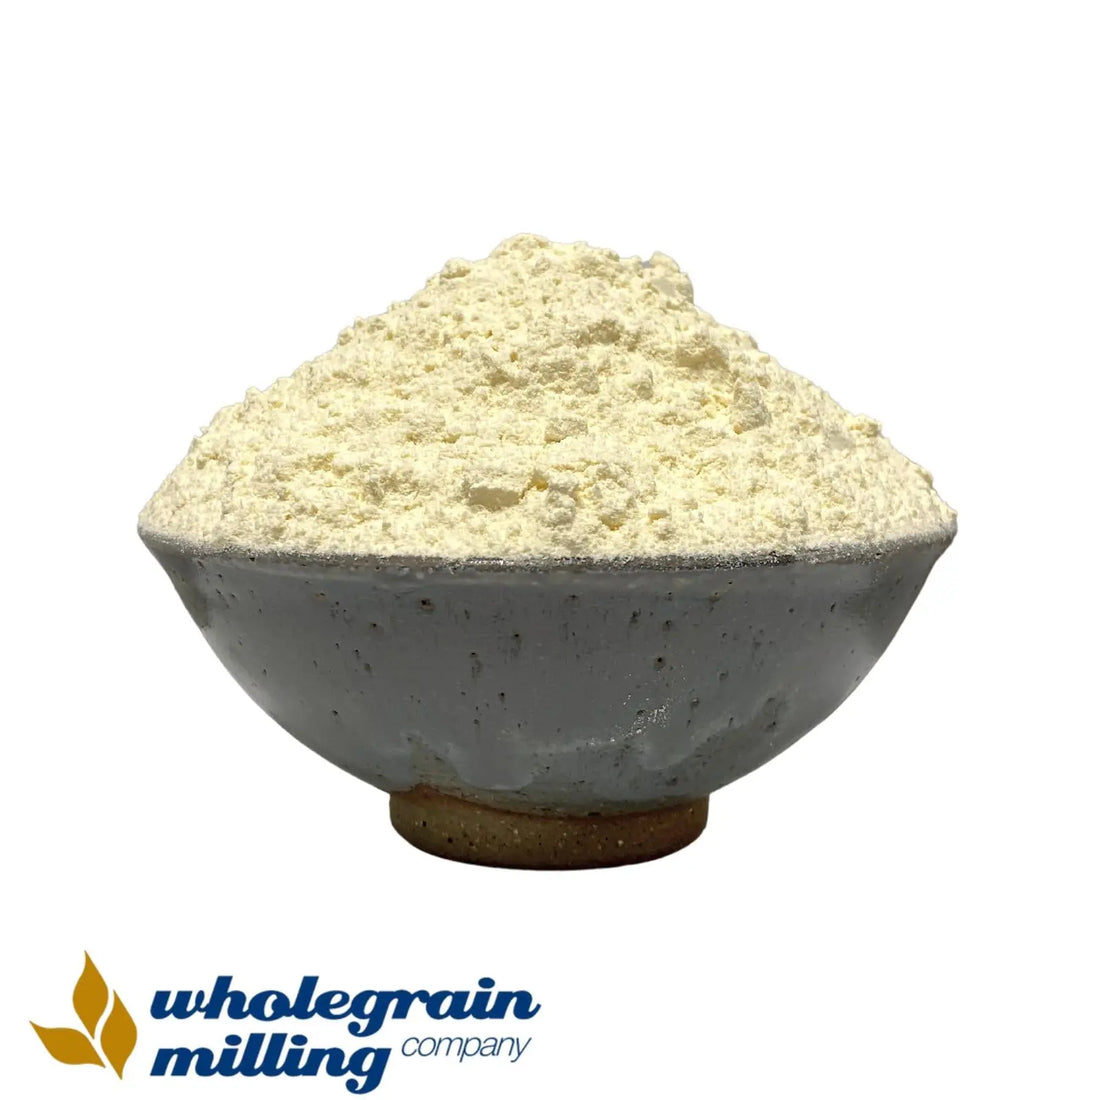 Khorasan Flour White Organic 1kg